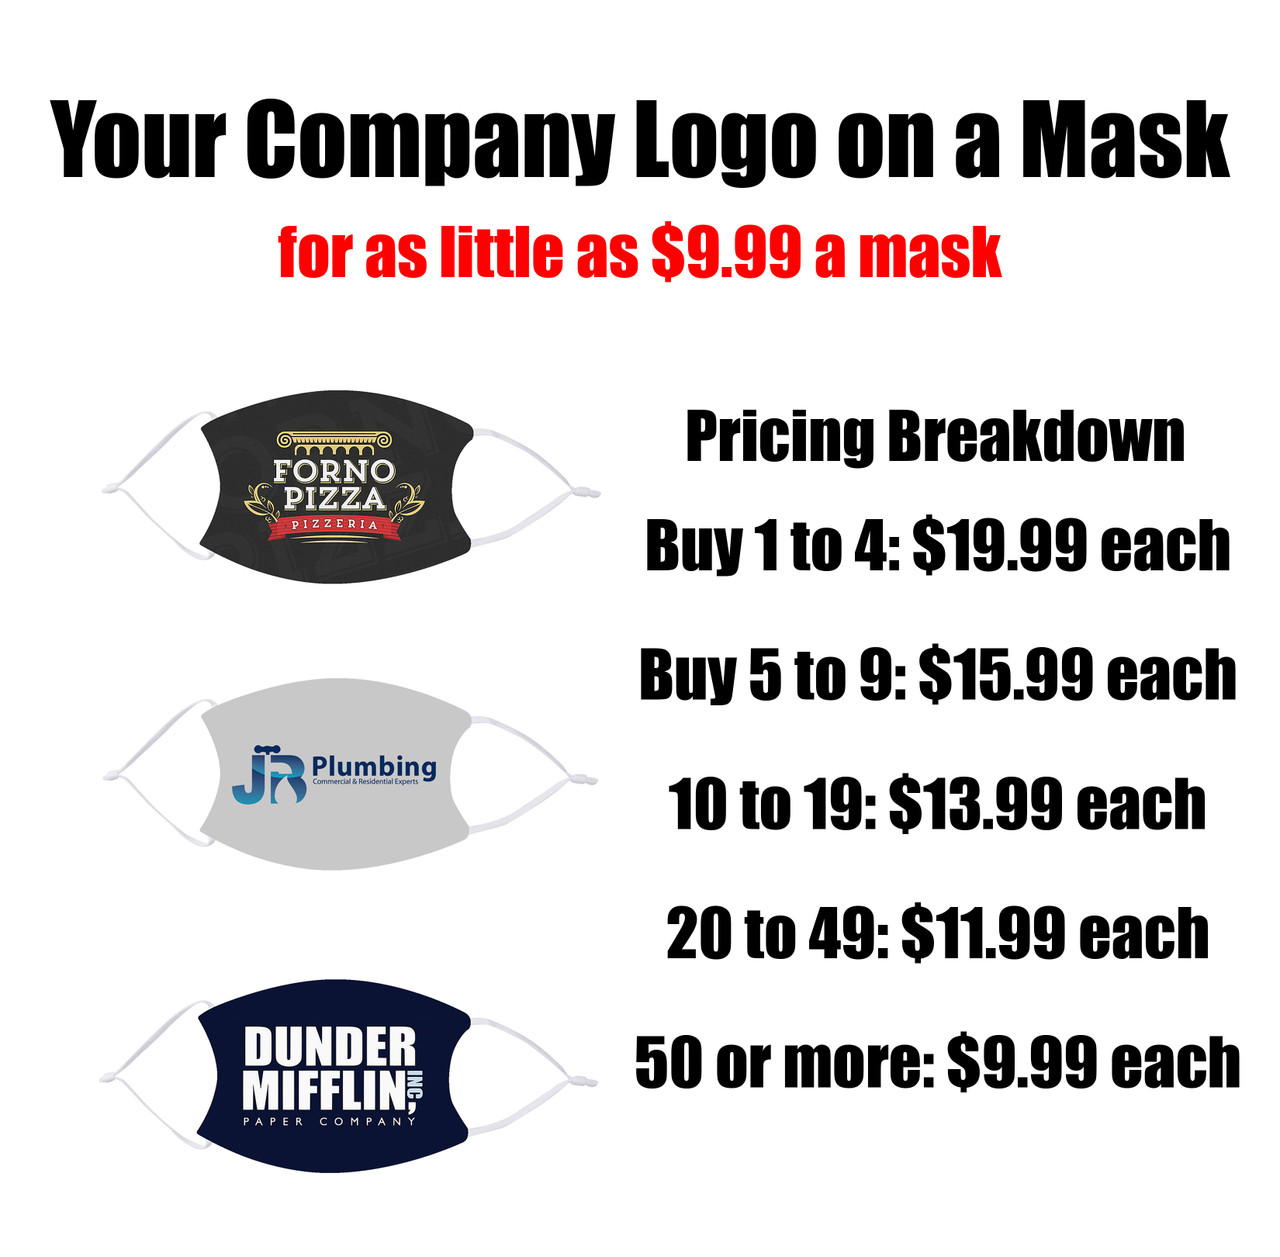 Dunder Mifflin Paper Company Face Mask